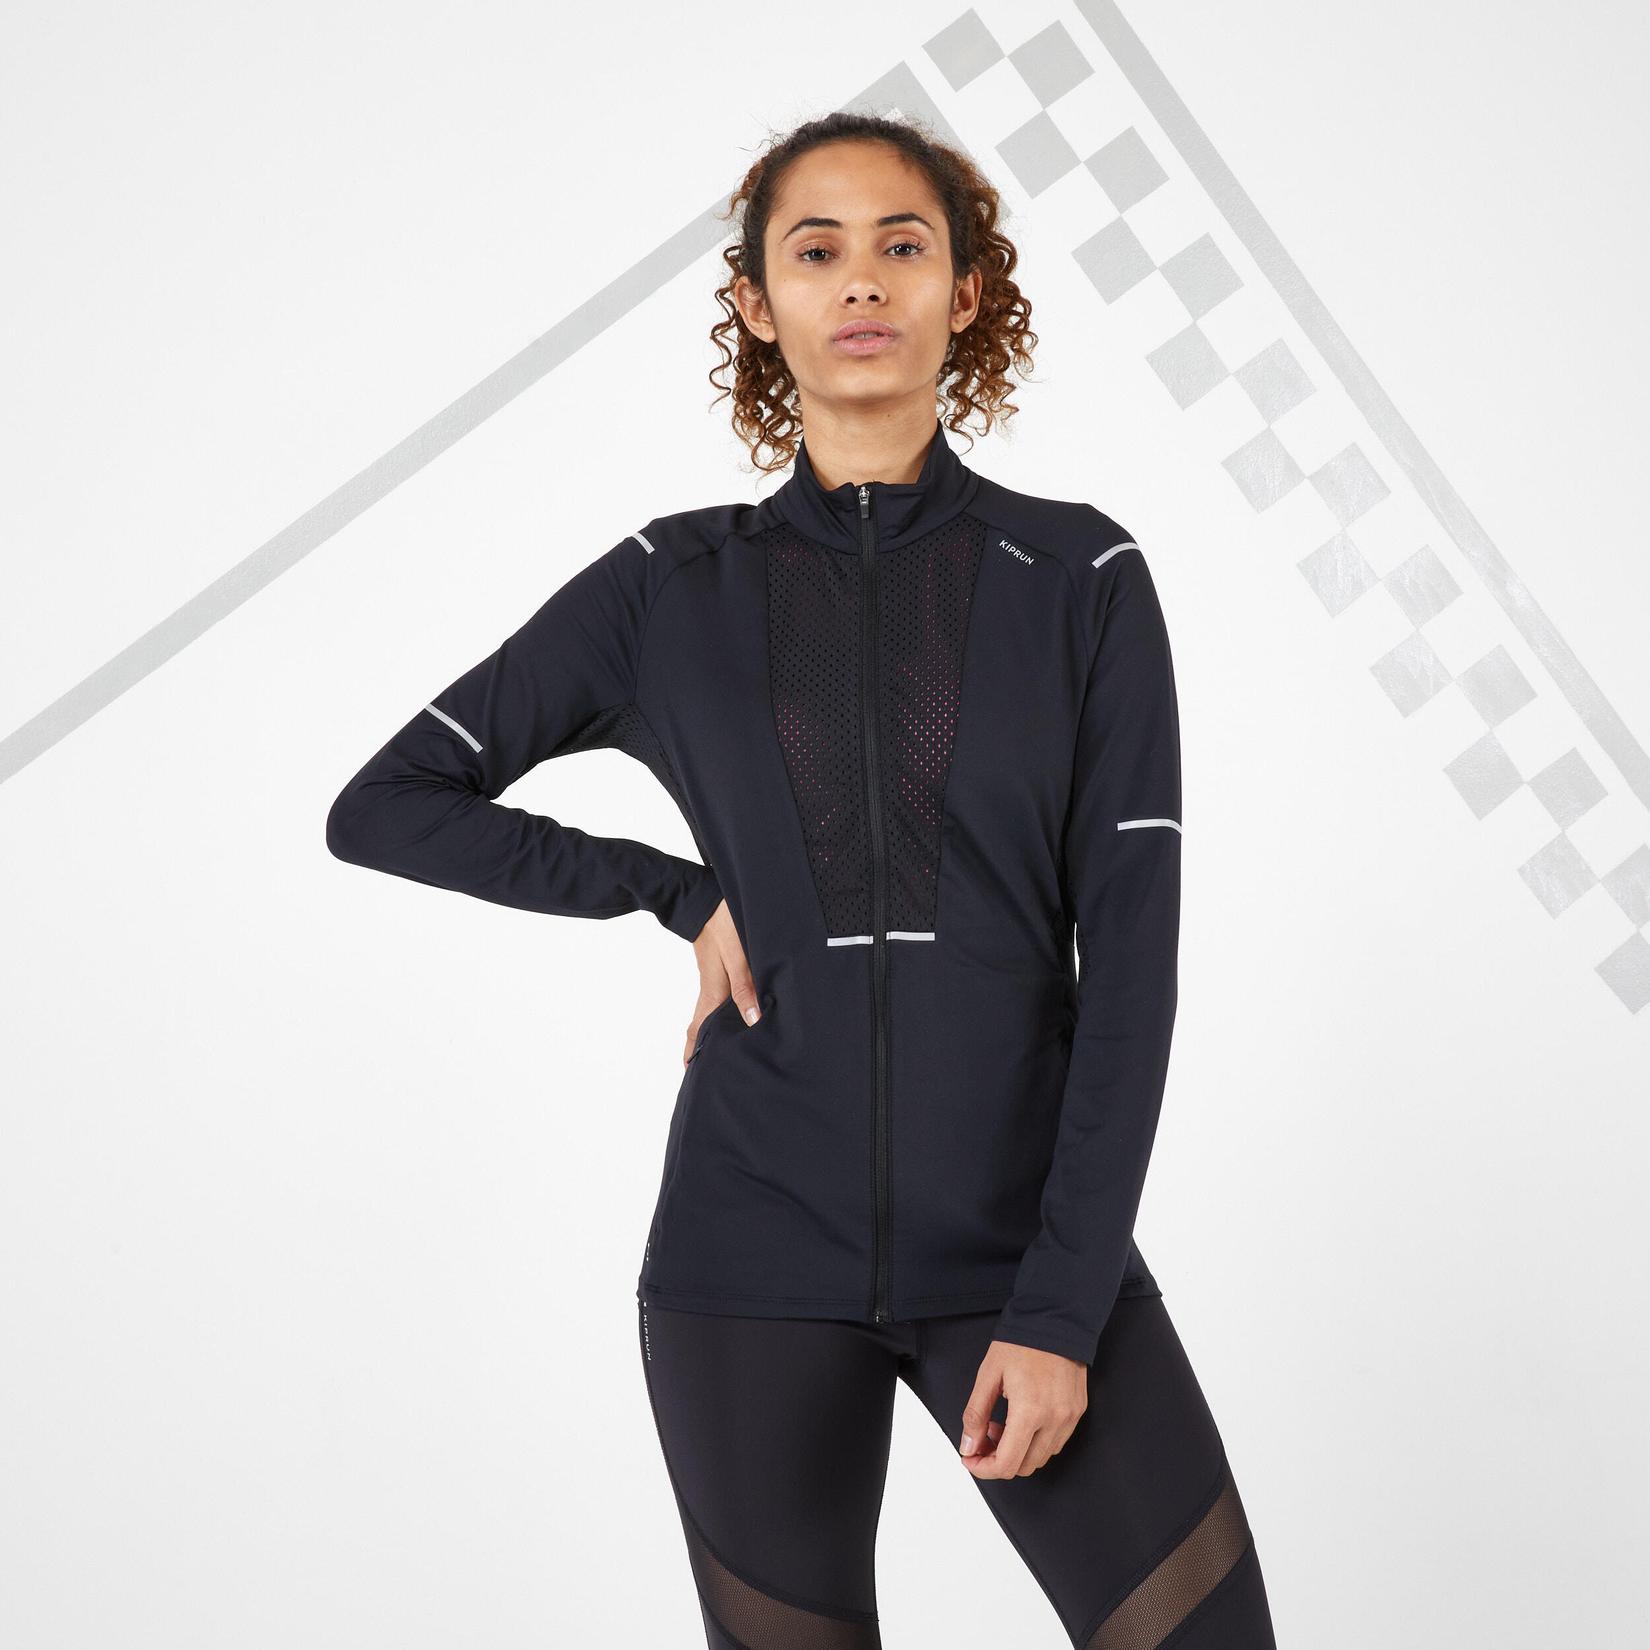 Kiprun Women's Running Breathable Jacket - black offers at R 899 in Decathlon